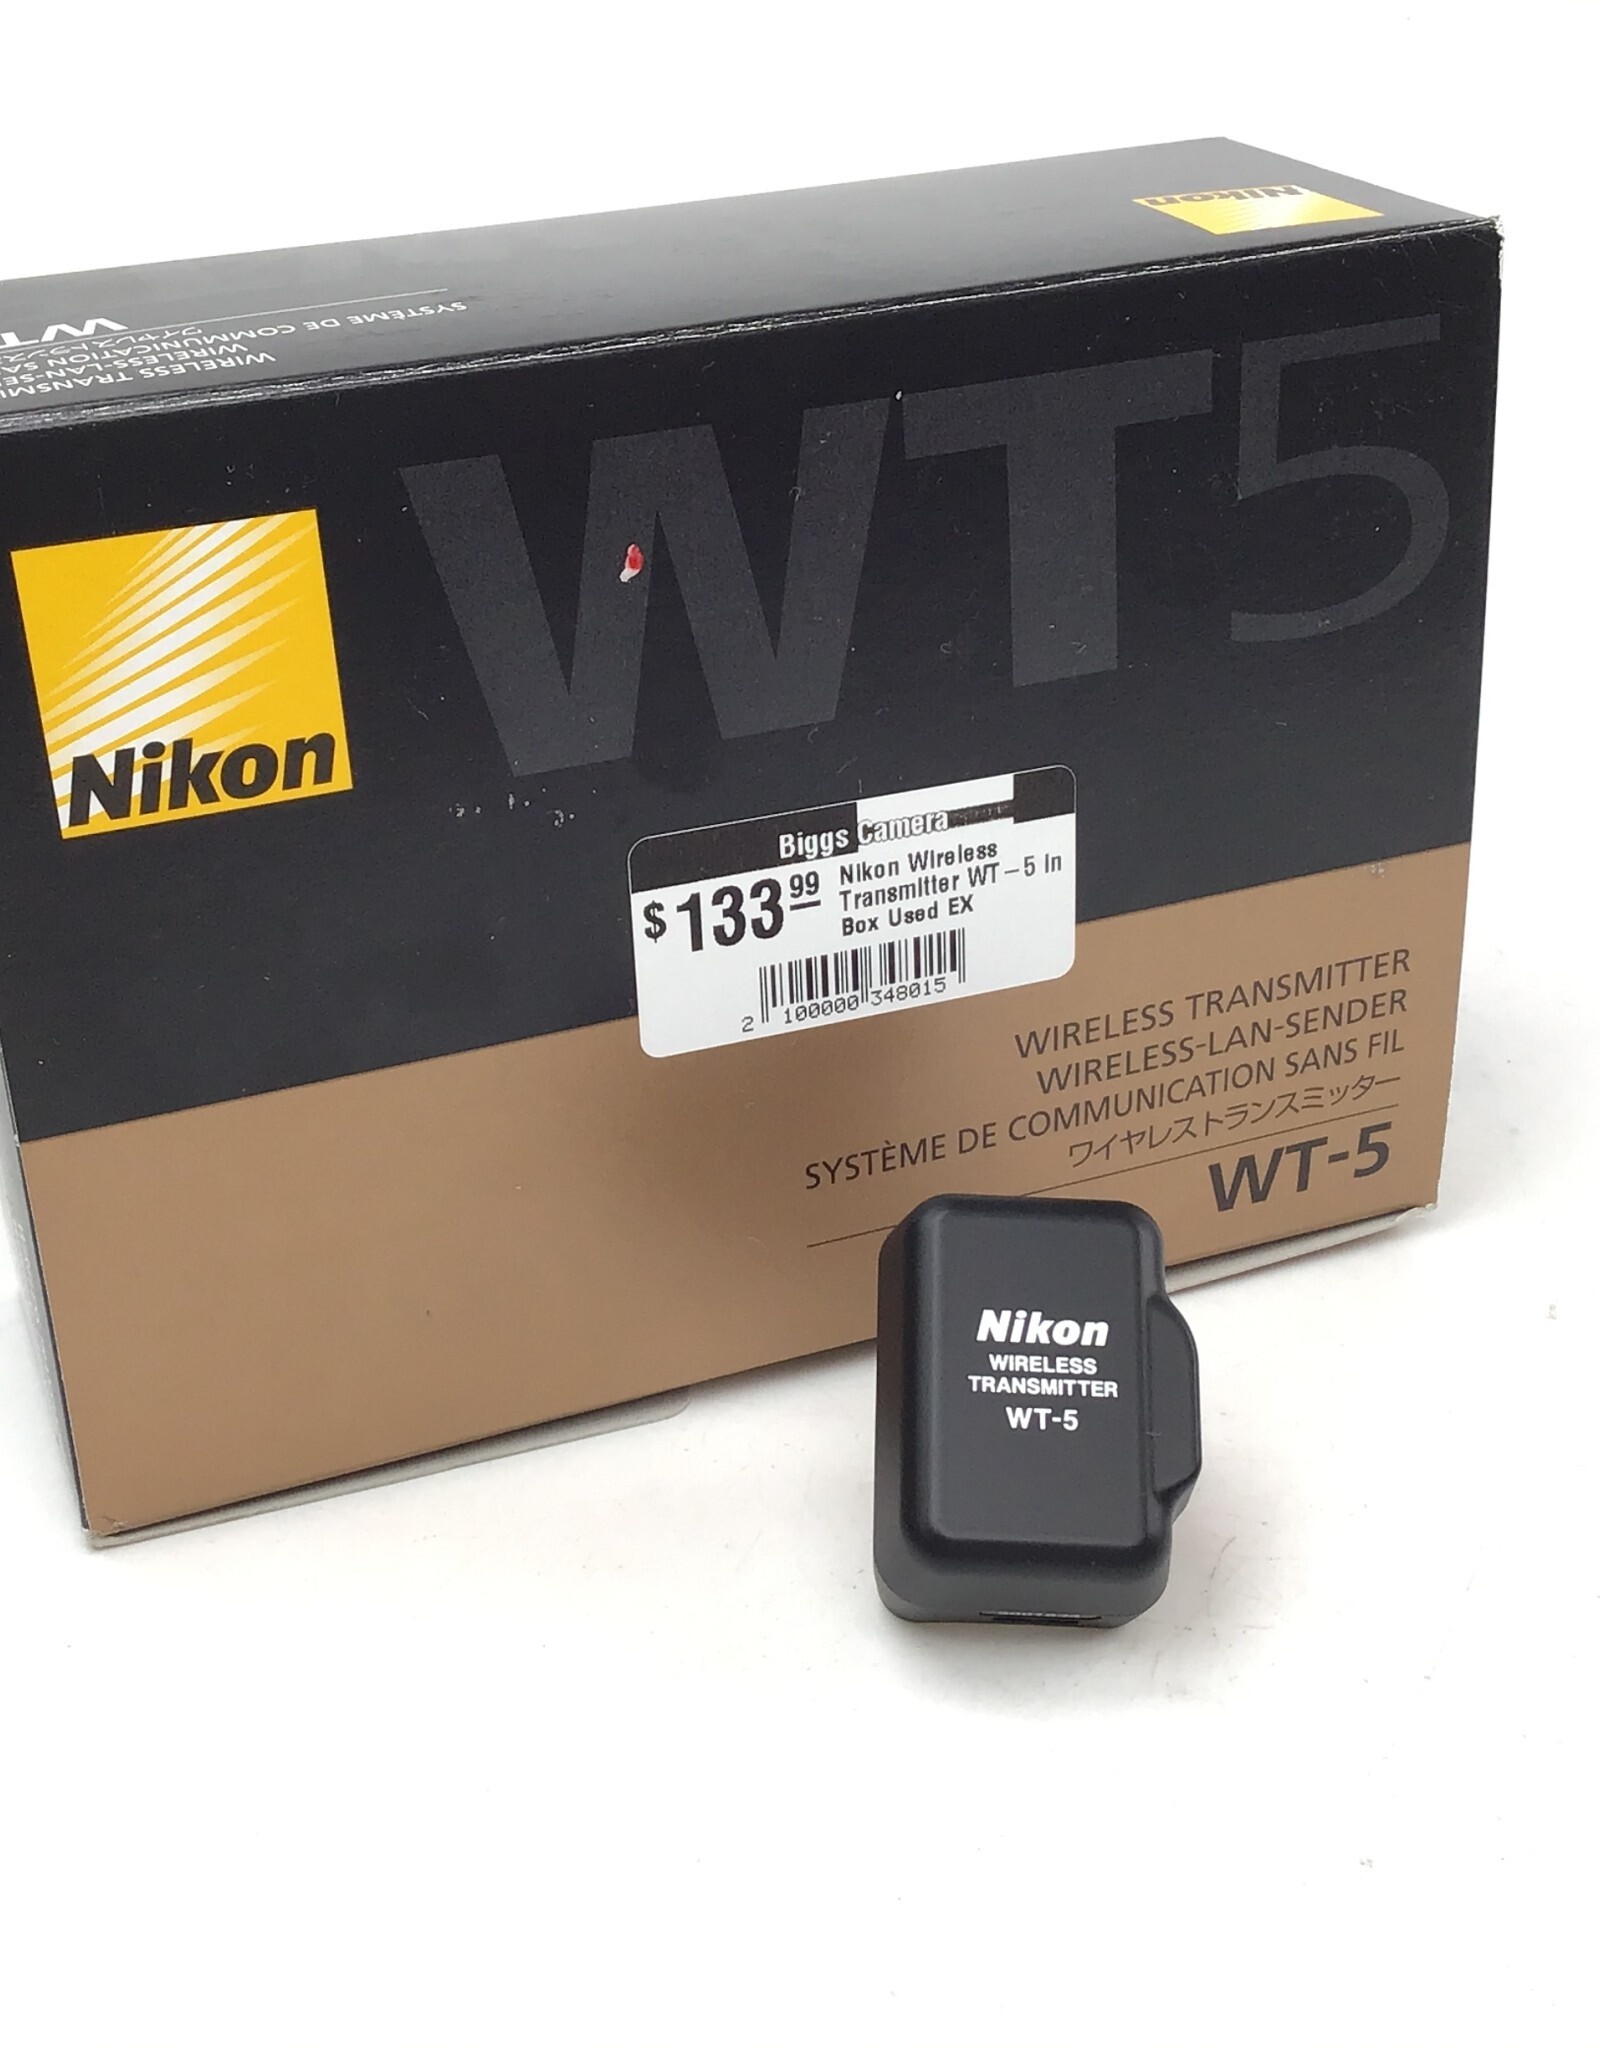 NIKON Nikon Wireless Transmitter WT-5 in Box Used EX